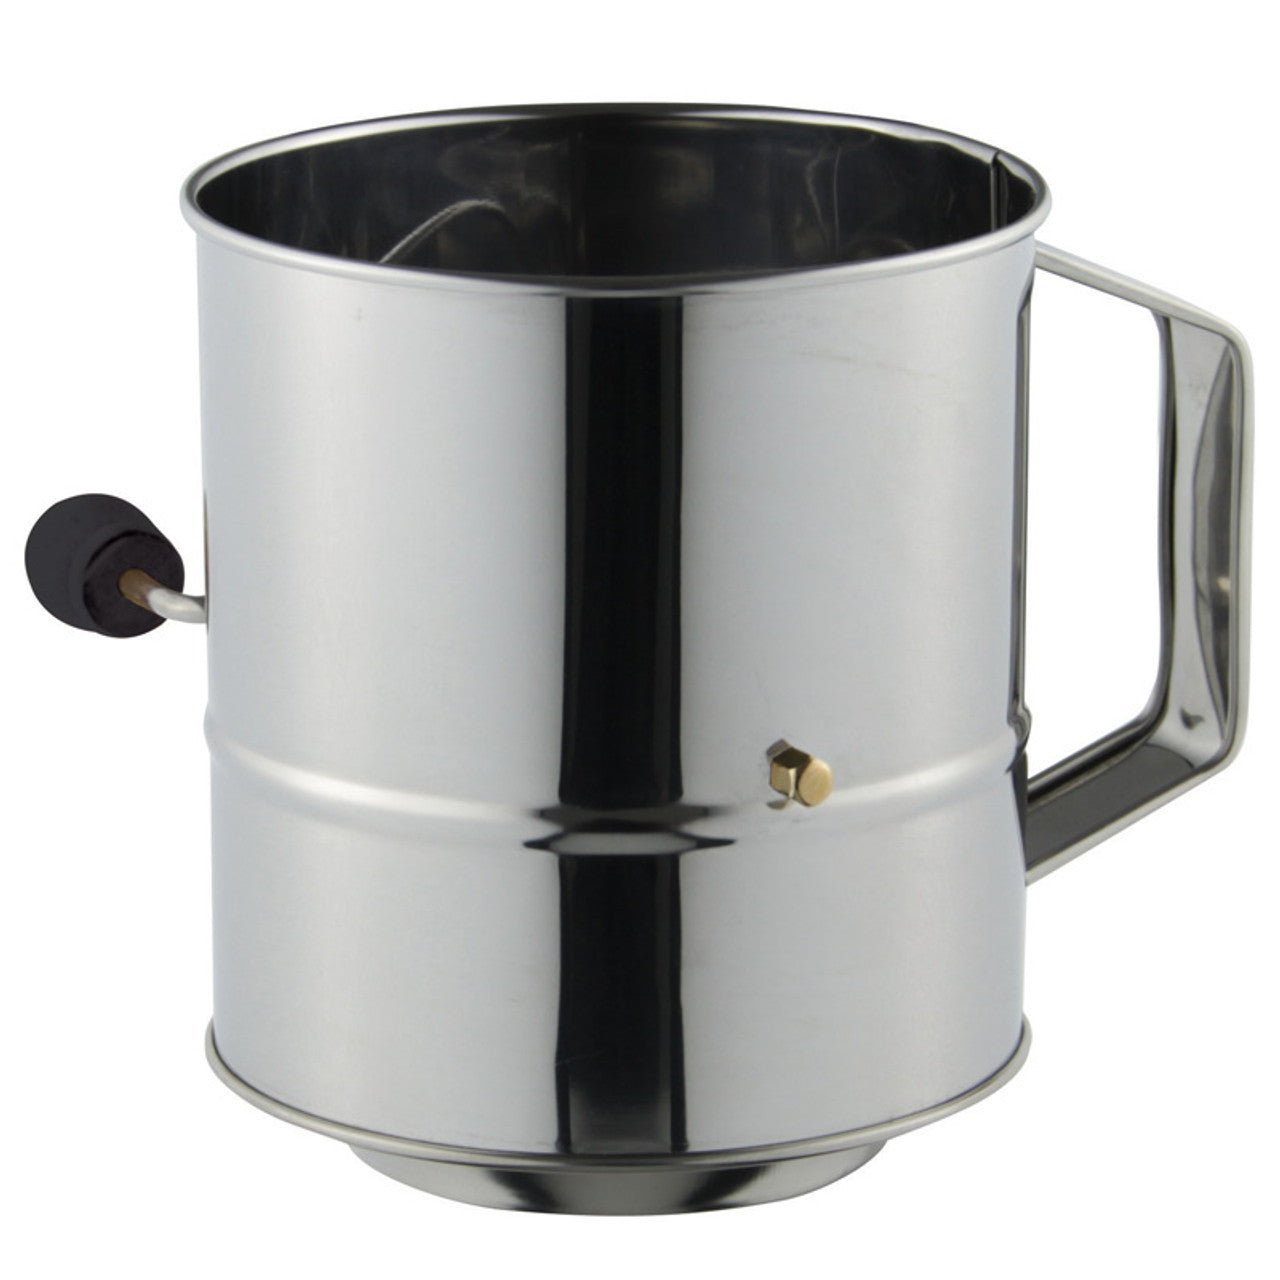 Crank Handle Flour Sifter - 5 Cup